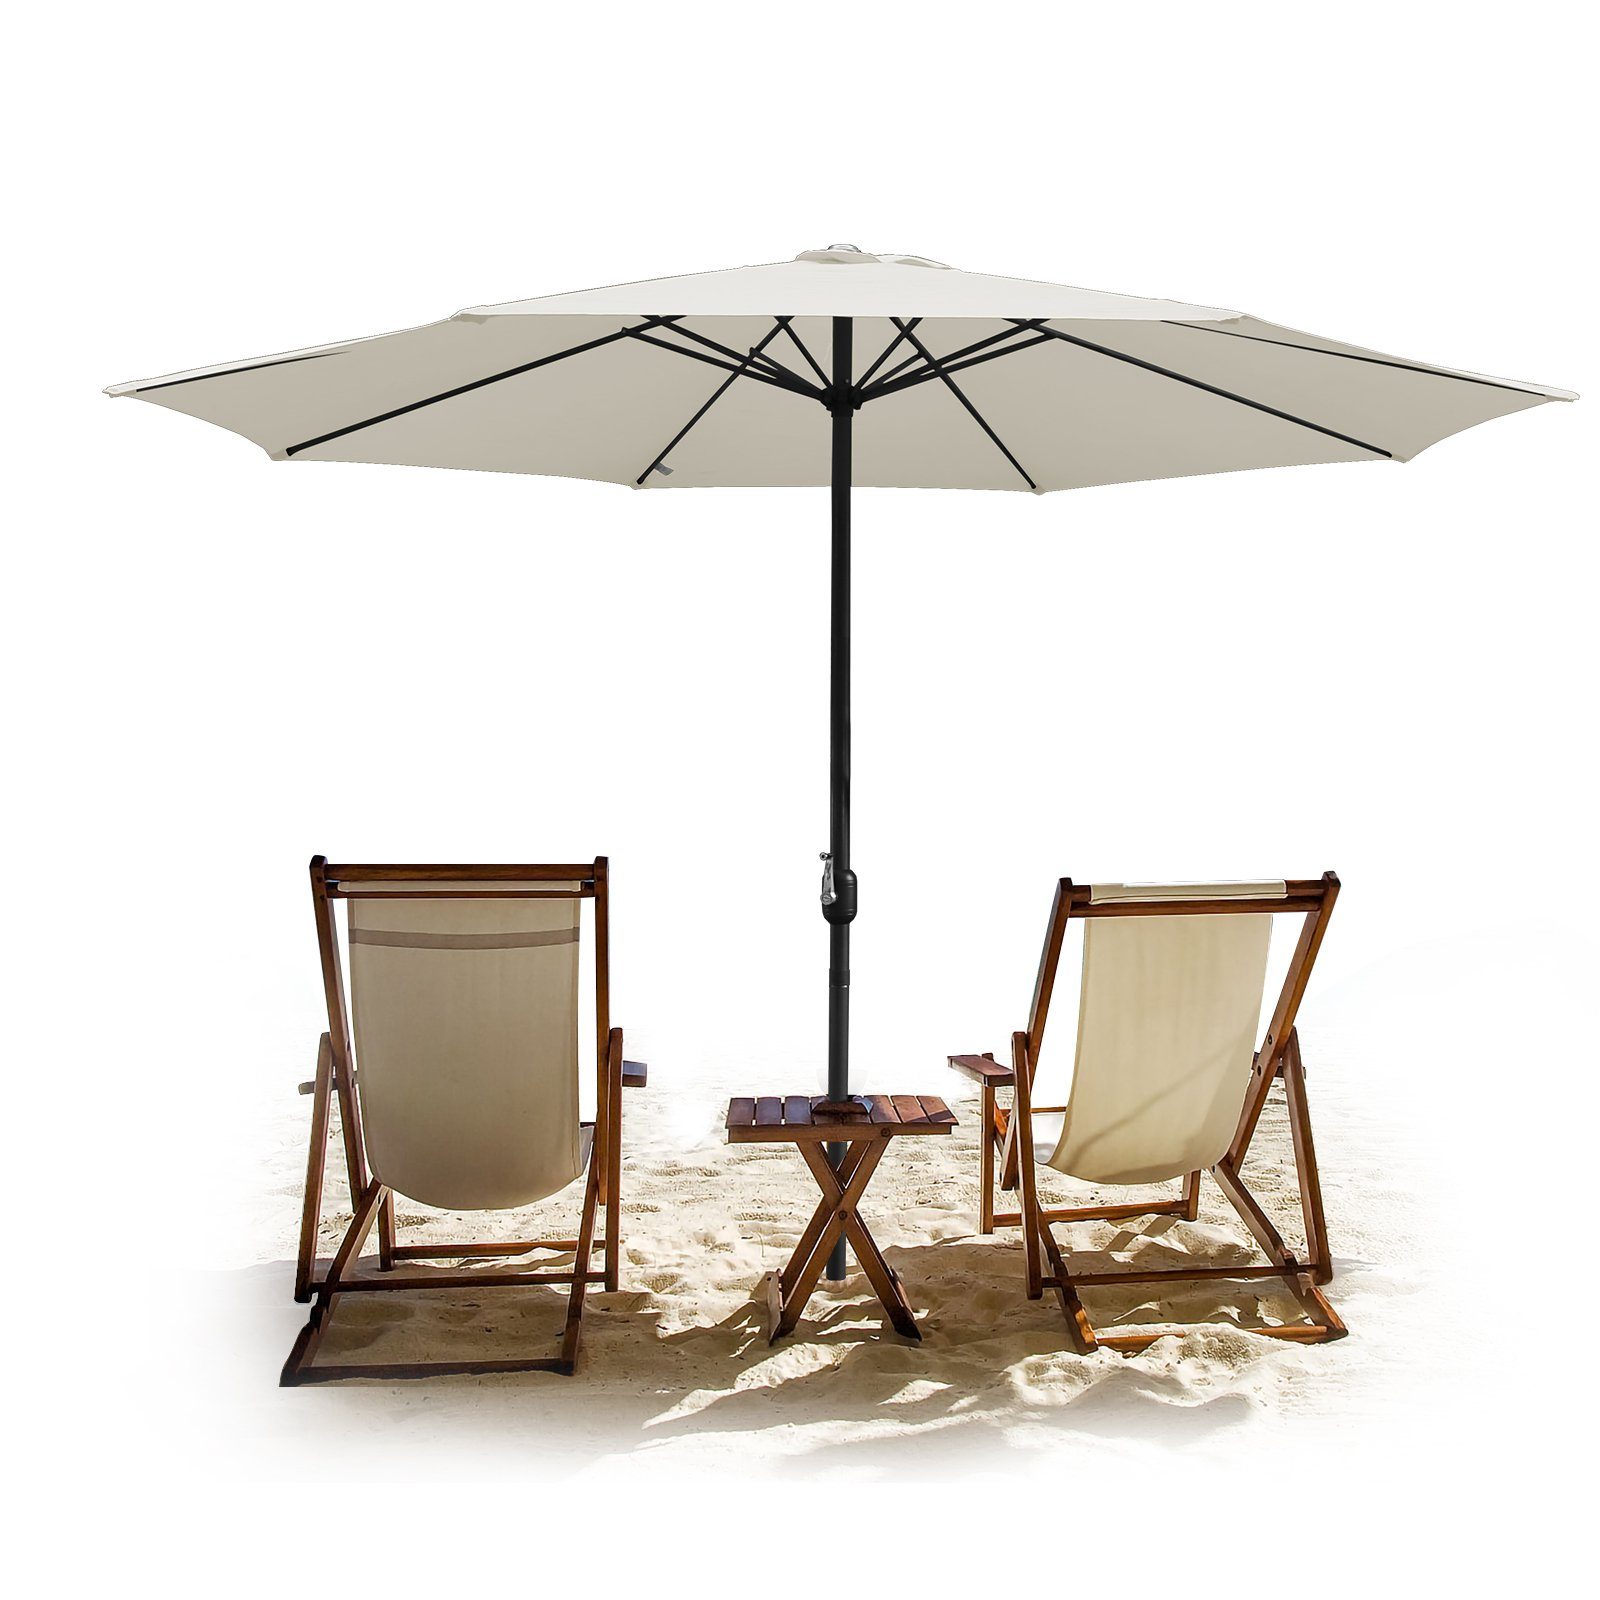 Sonnenschirm 3m-3.5m Sonnenschirm Marktschirm mit Handkurbel UV40+ Outdoor-Schirm Terrassen Gartenschirm